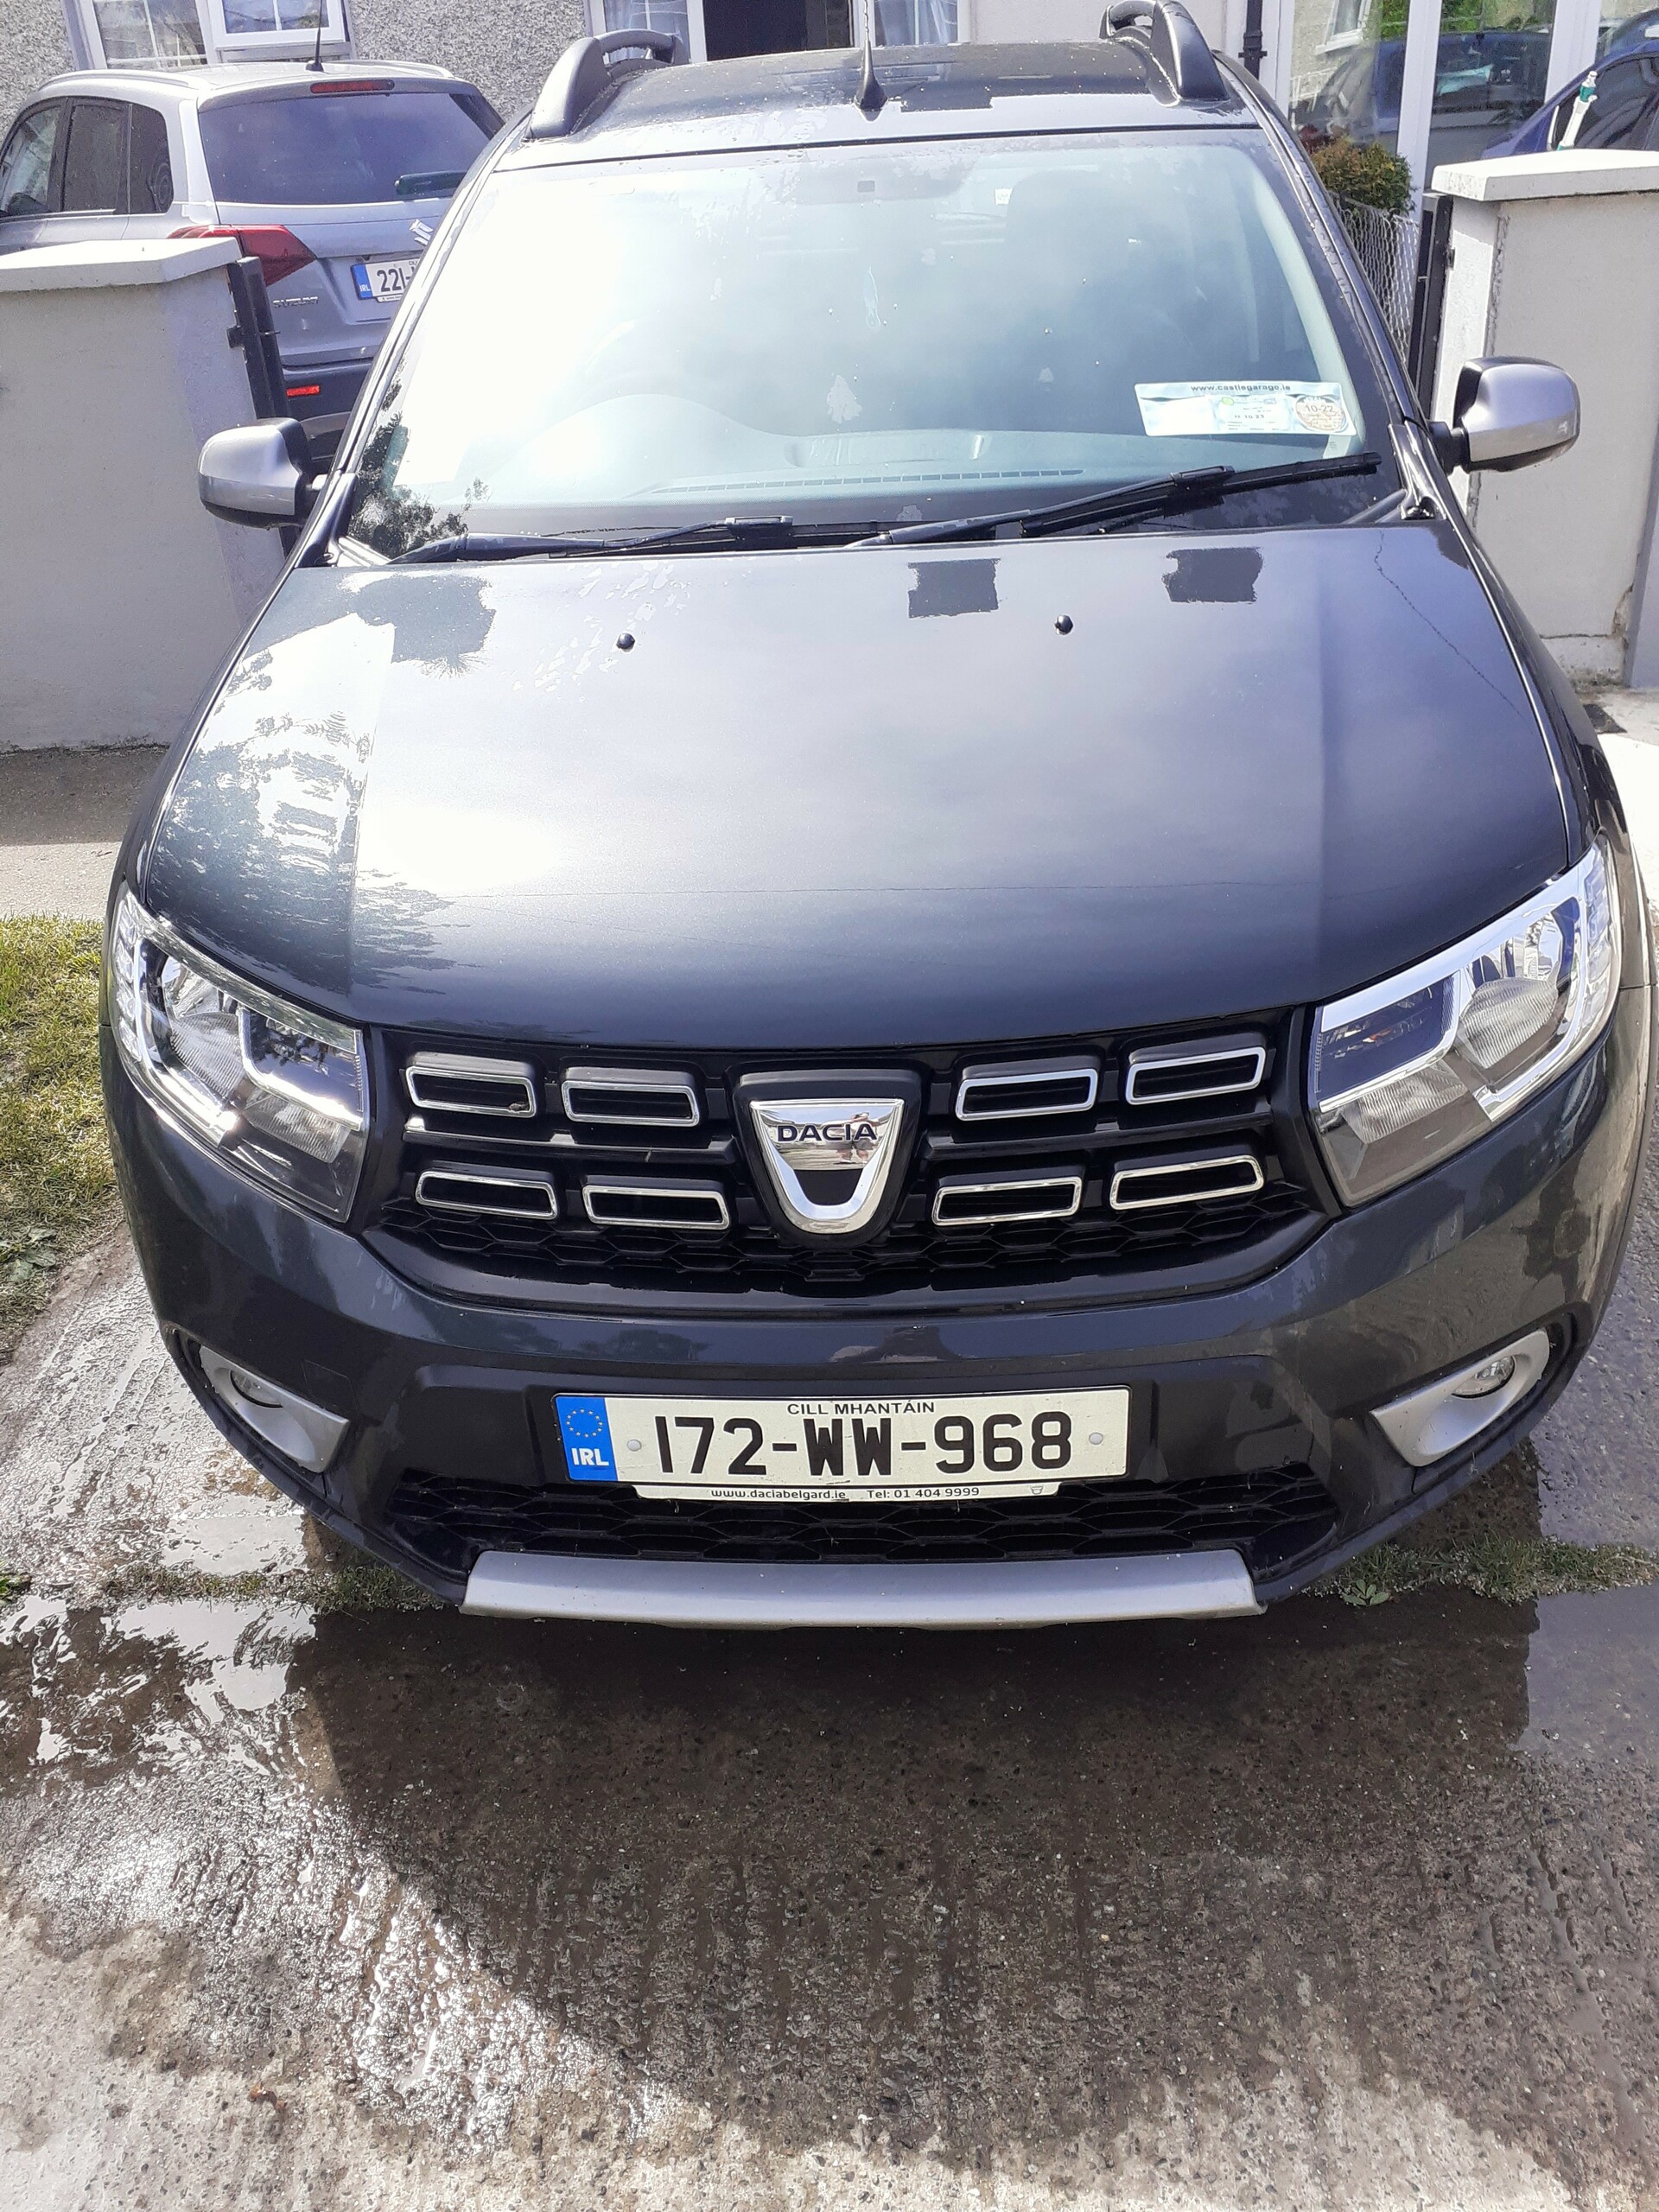 Used Dacia Sandero 2017 in Wicklow